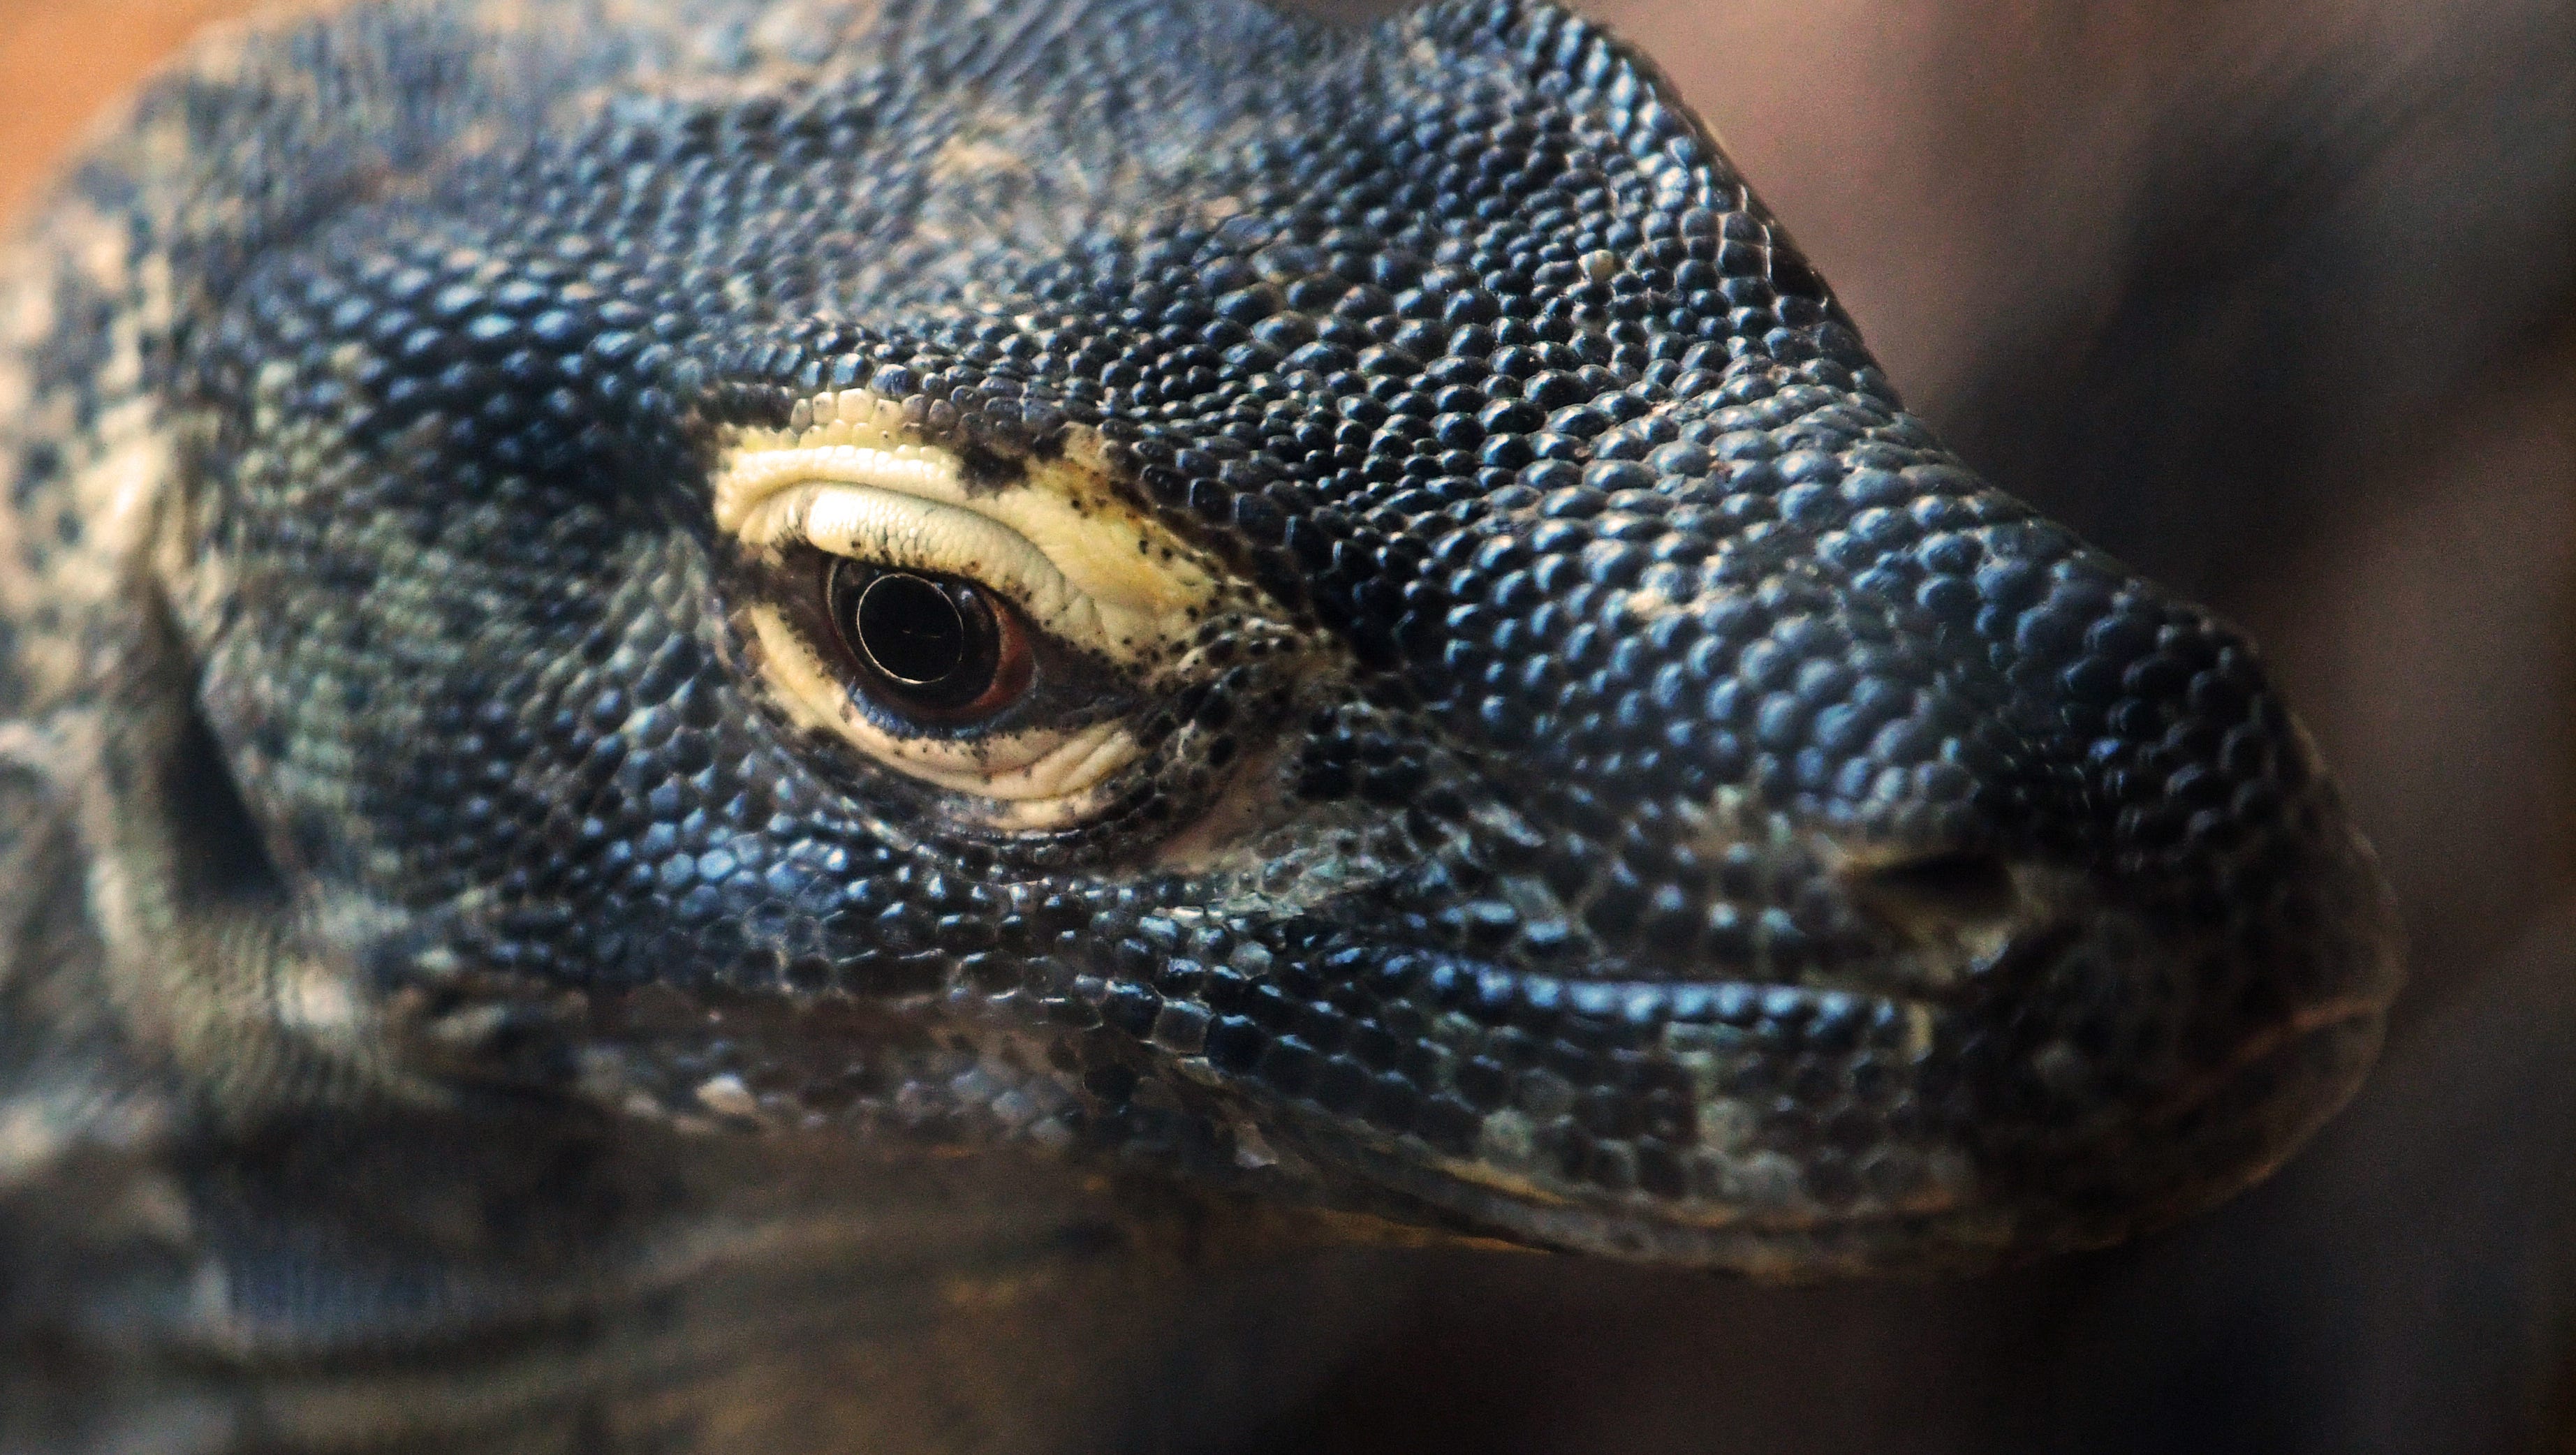 Kute Kangaroos Komodo Dragons Are New At Brevard Zoo